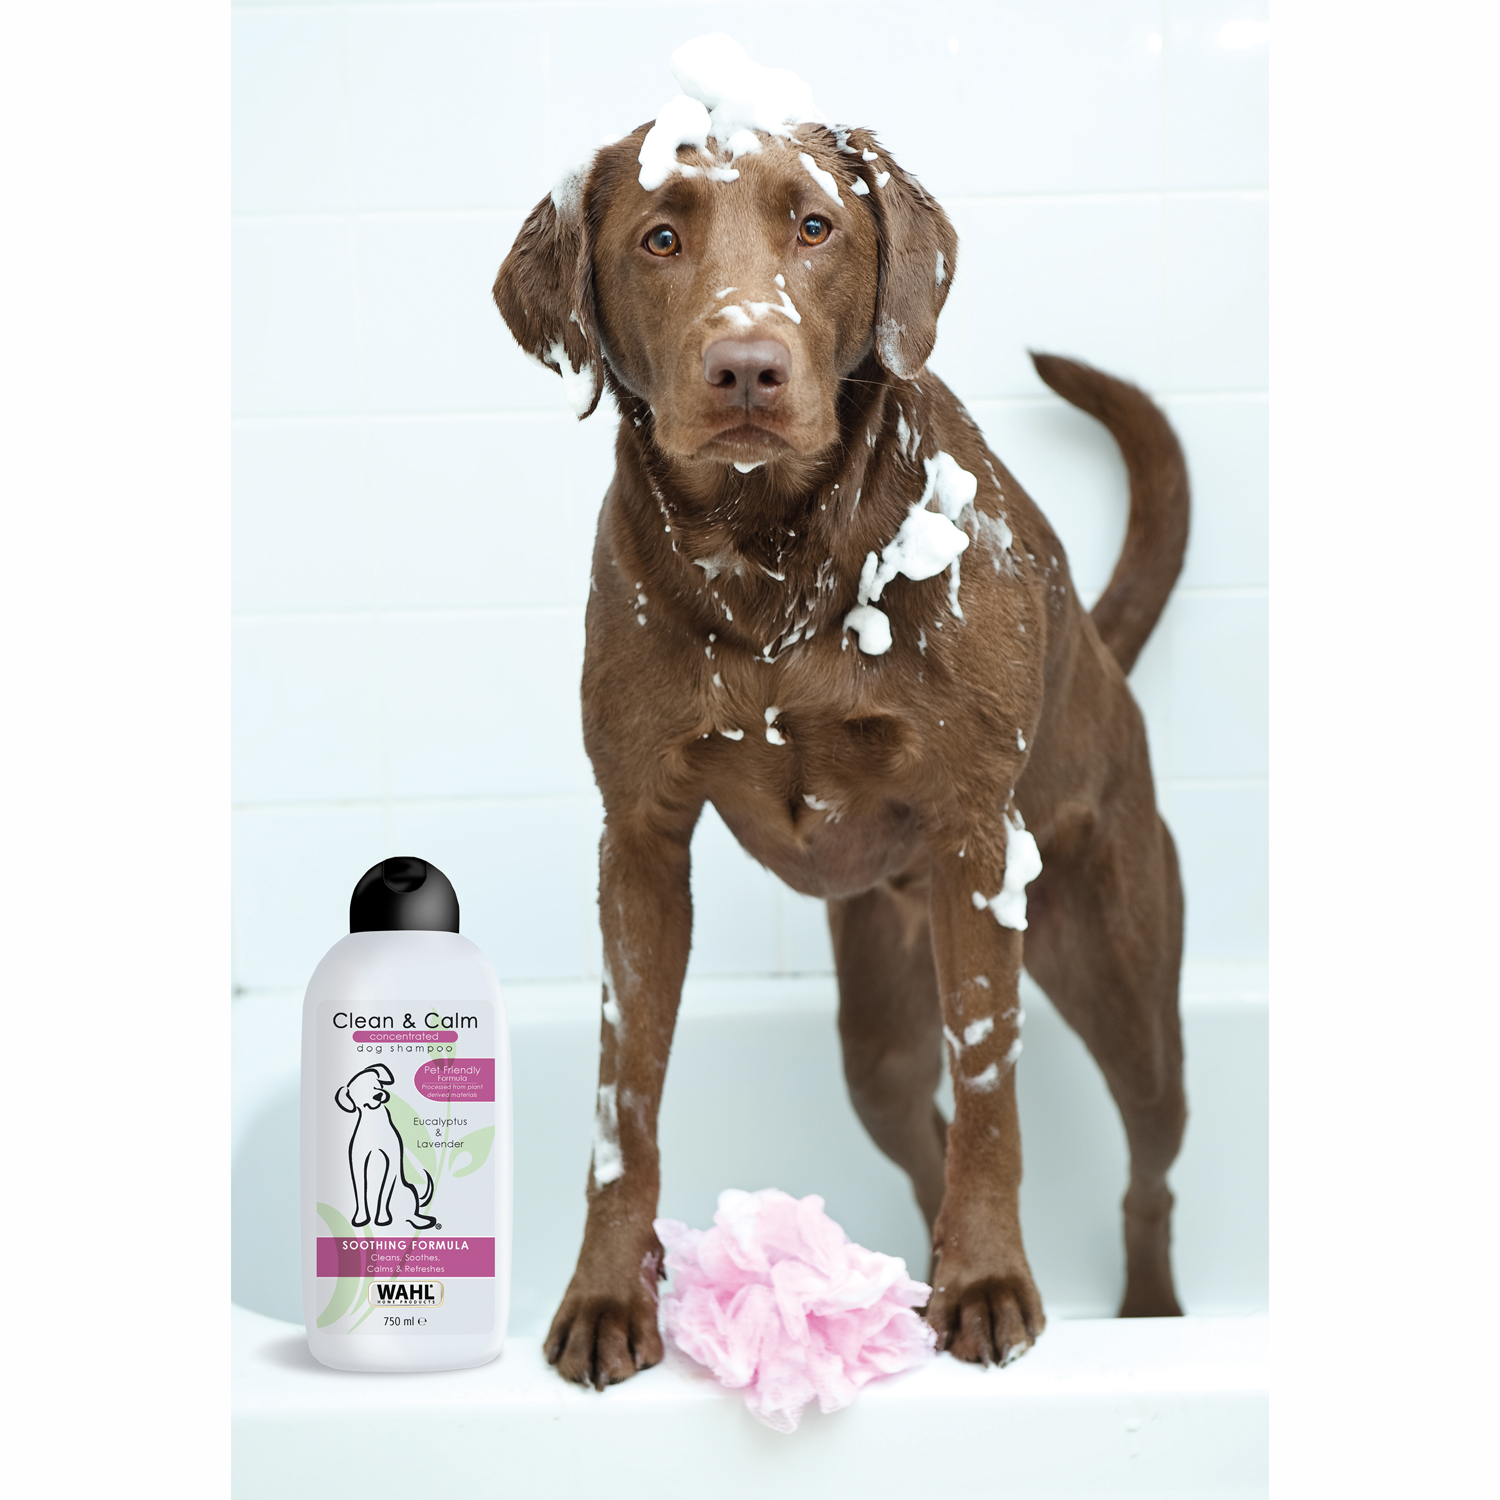 WAHL Clean 750 and ml Hundeshampoo Calm, Shampoo-Konzentrat